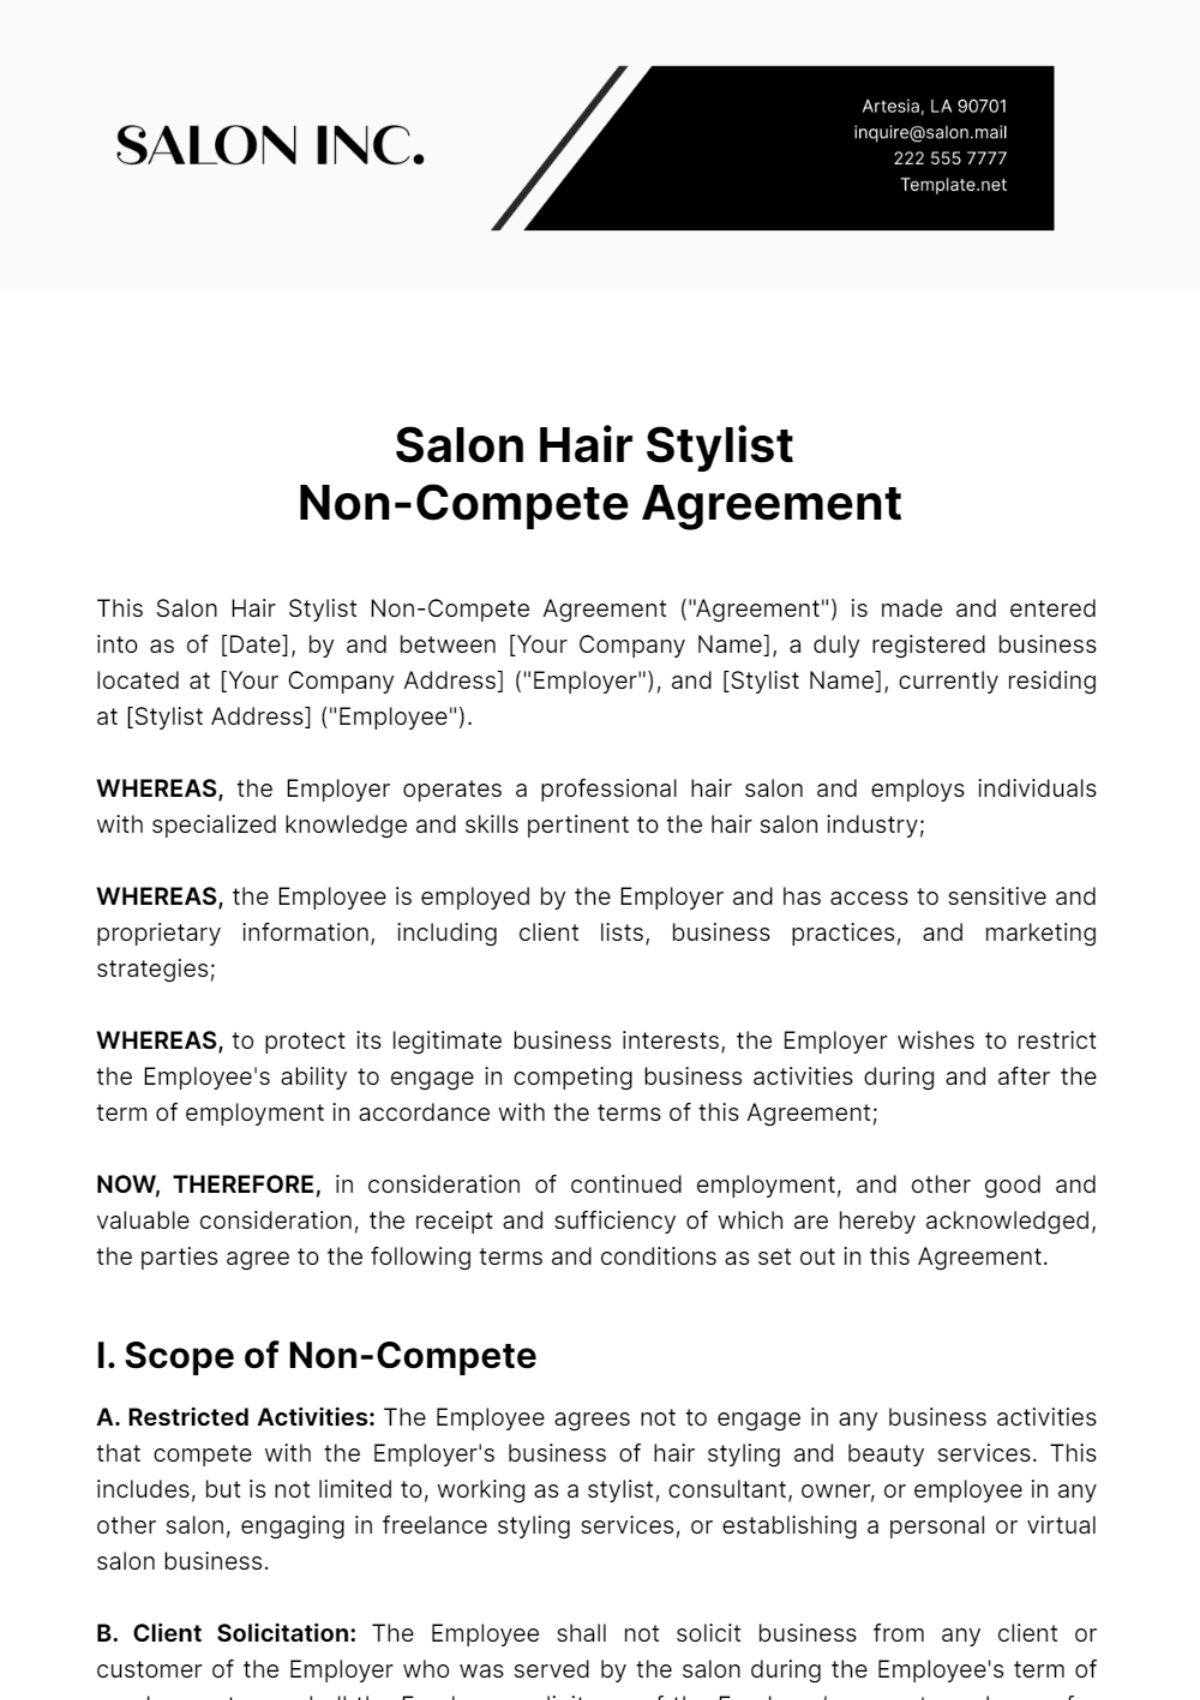 Salon Hair Stylist Non-Compete Agreement Template